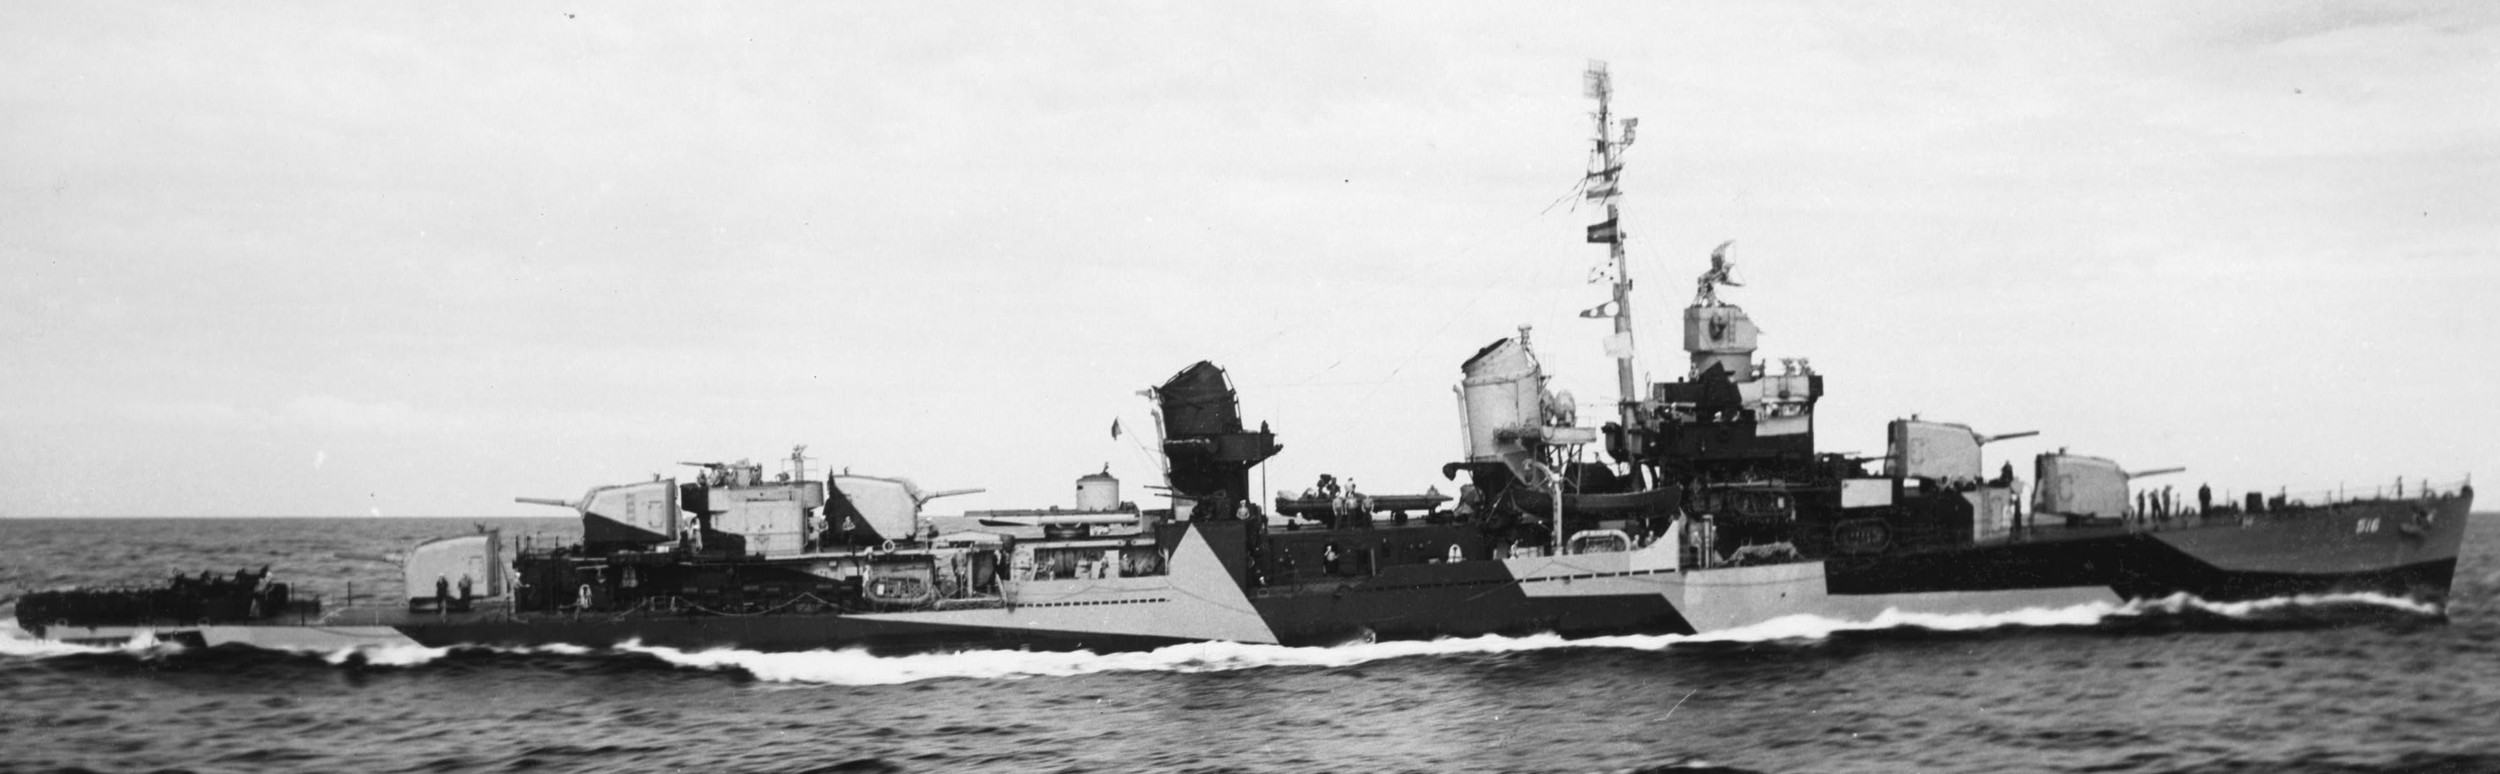 d-172 fgs zerstörer z3 german navy type-119 class destroyer uss wadsworth dd-515